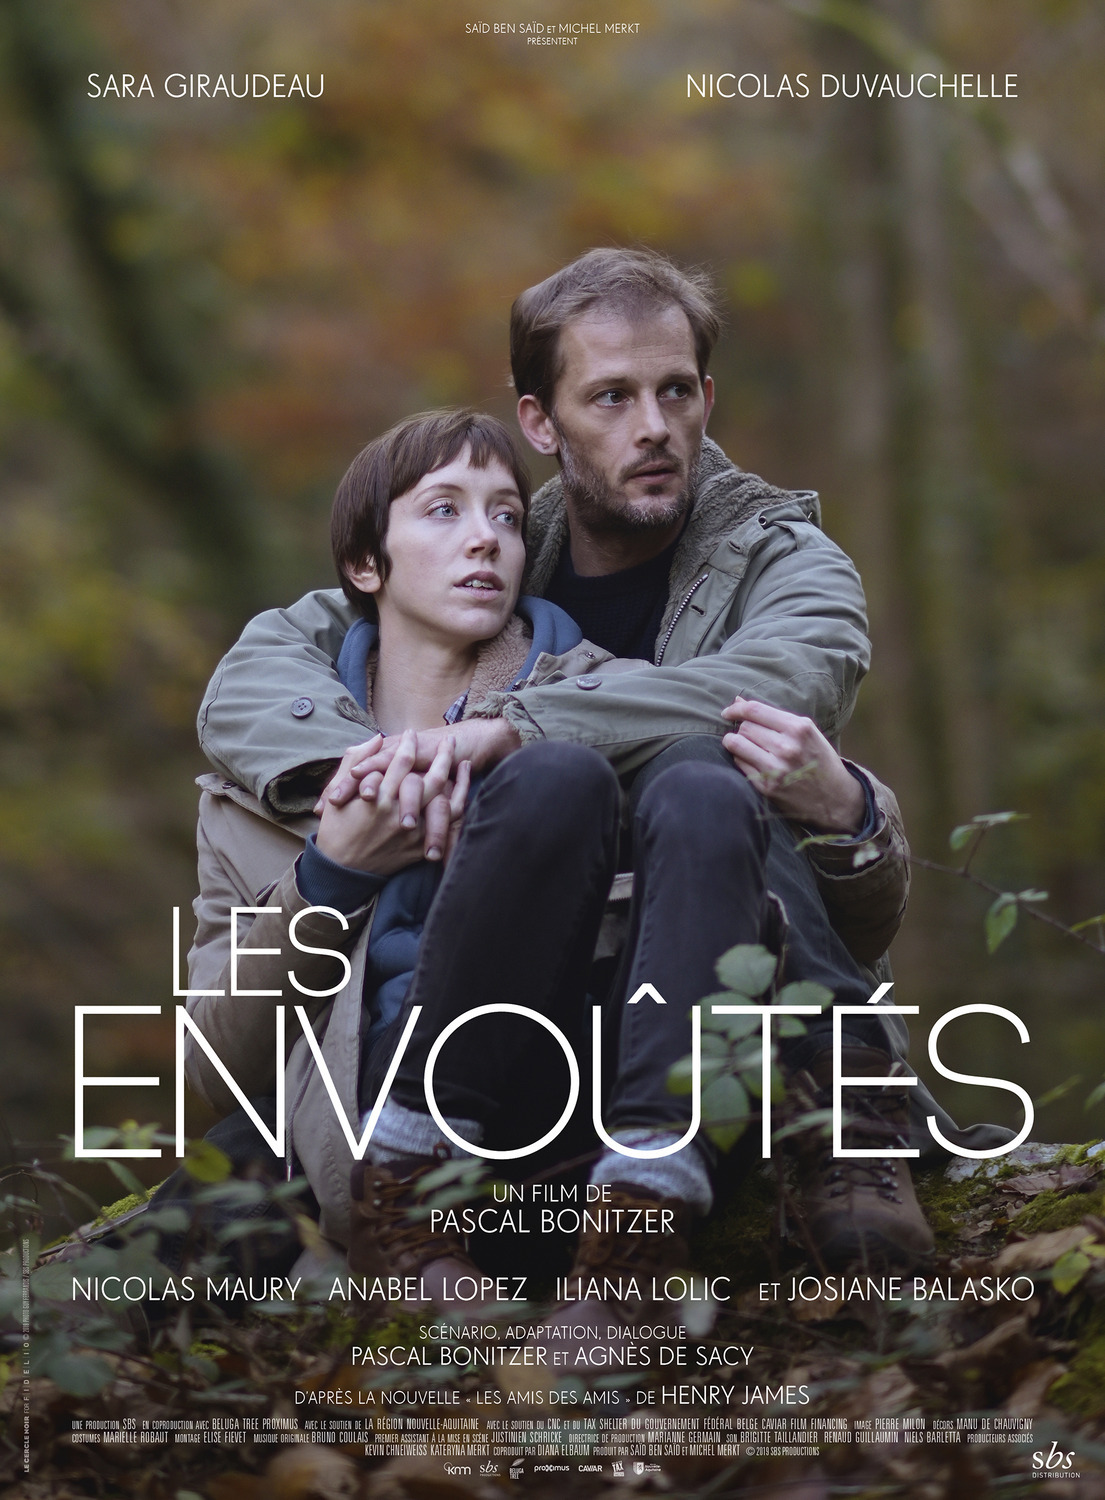 Extra Large Movie Poster Image for Les envoûtés 